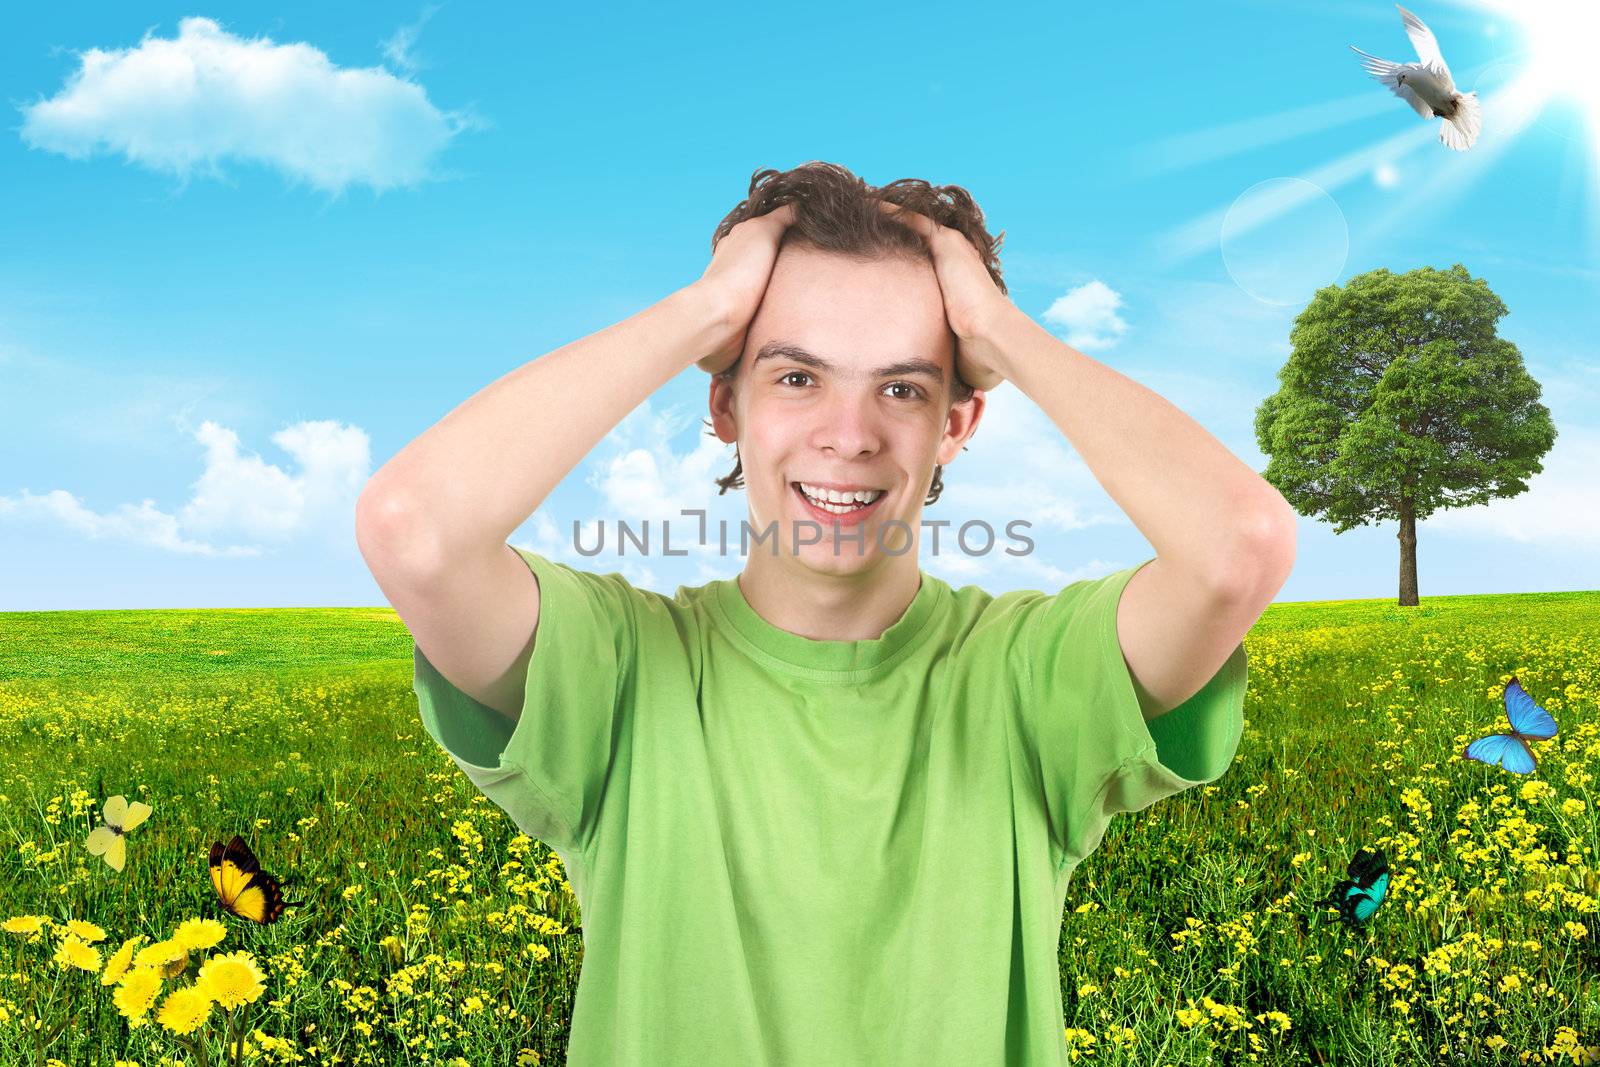 The joyful teenager on a green background. Summer